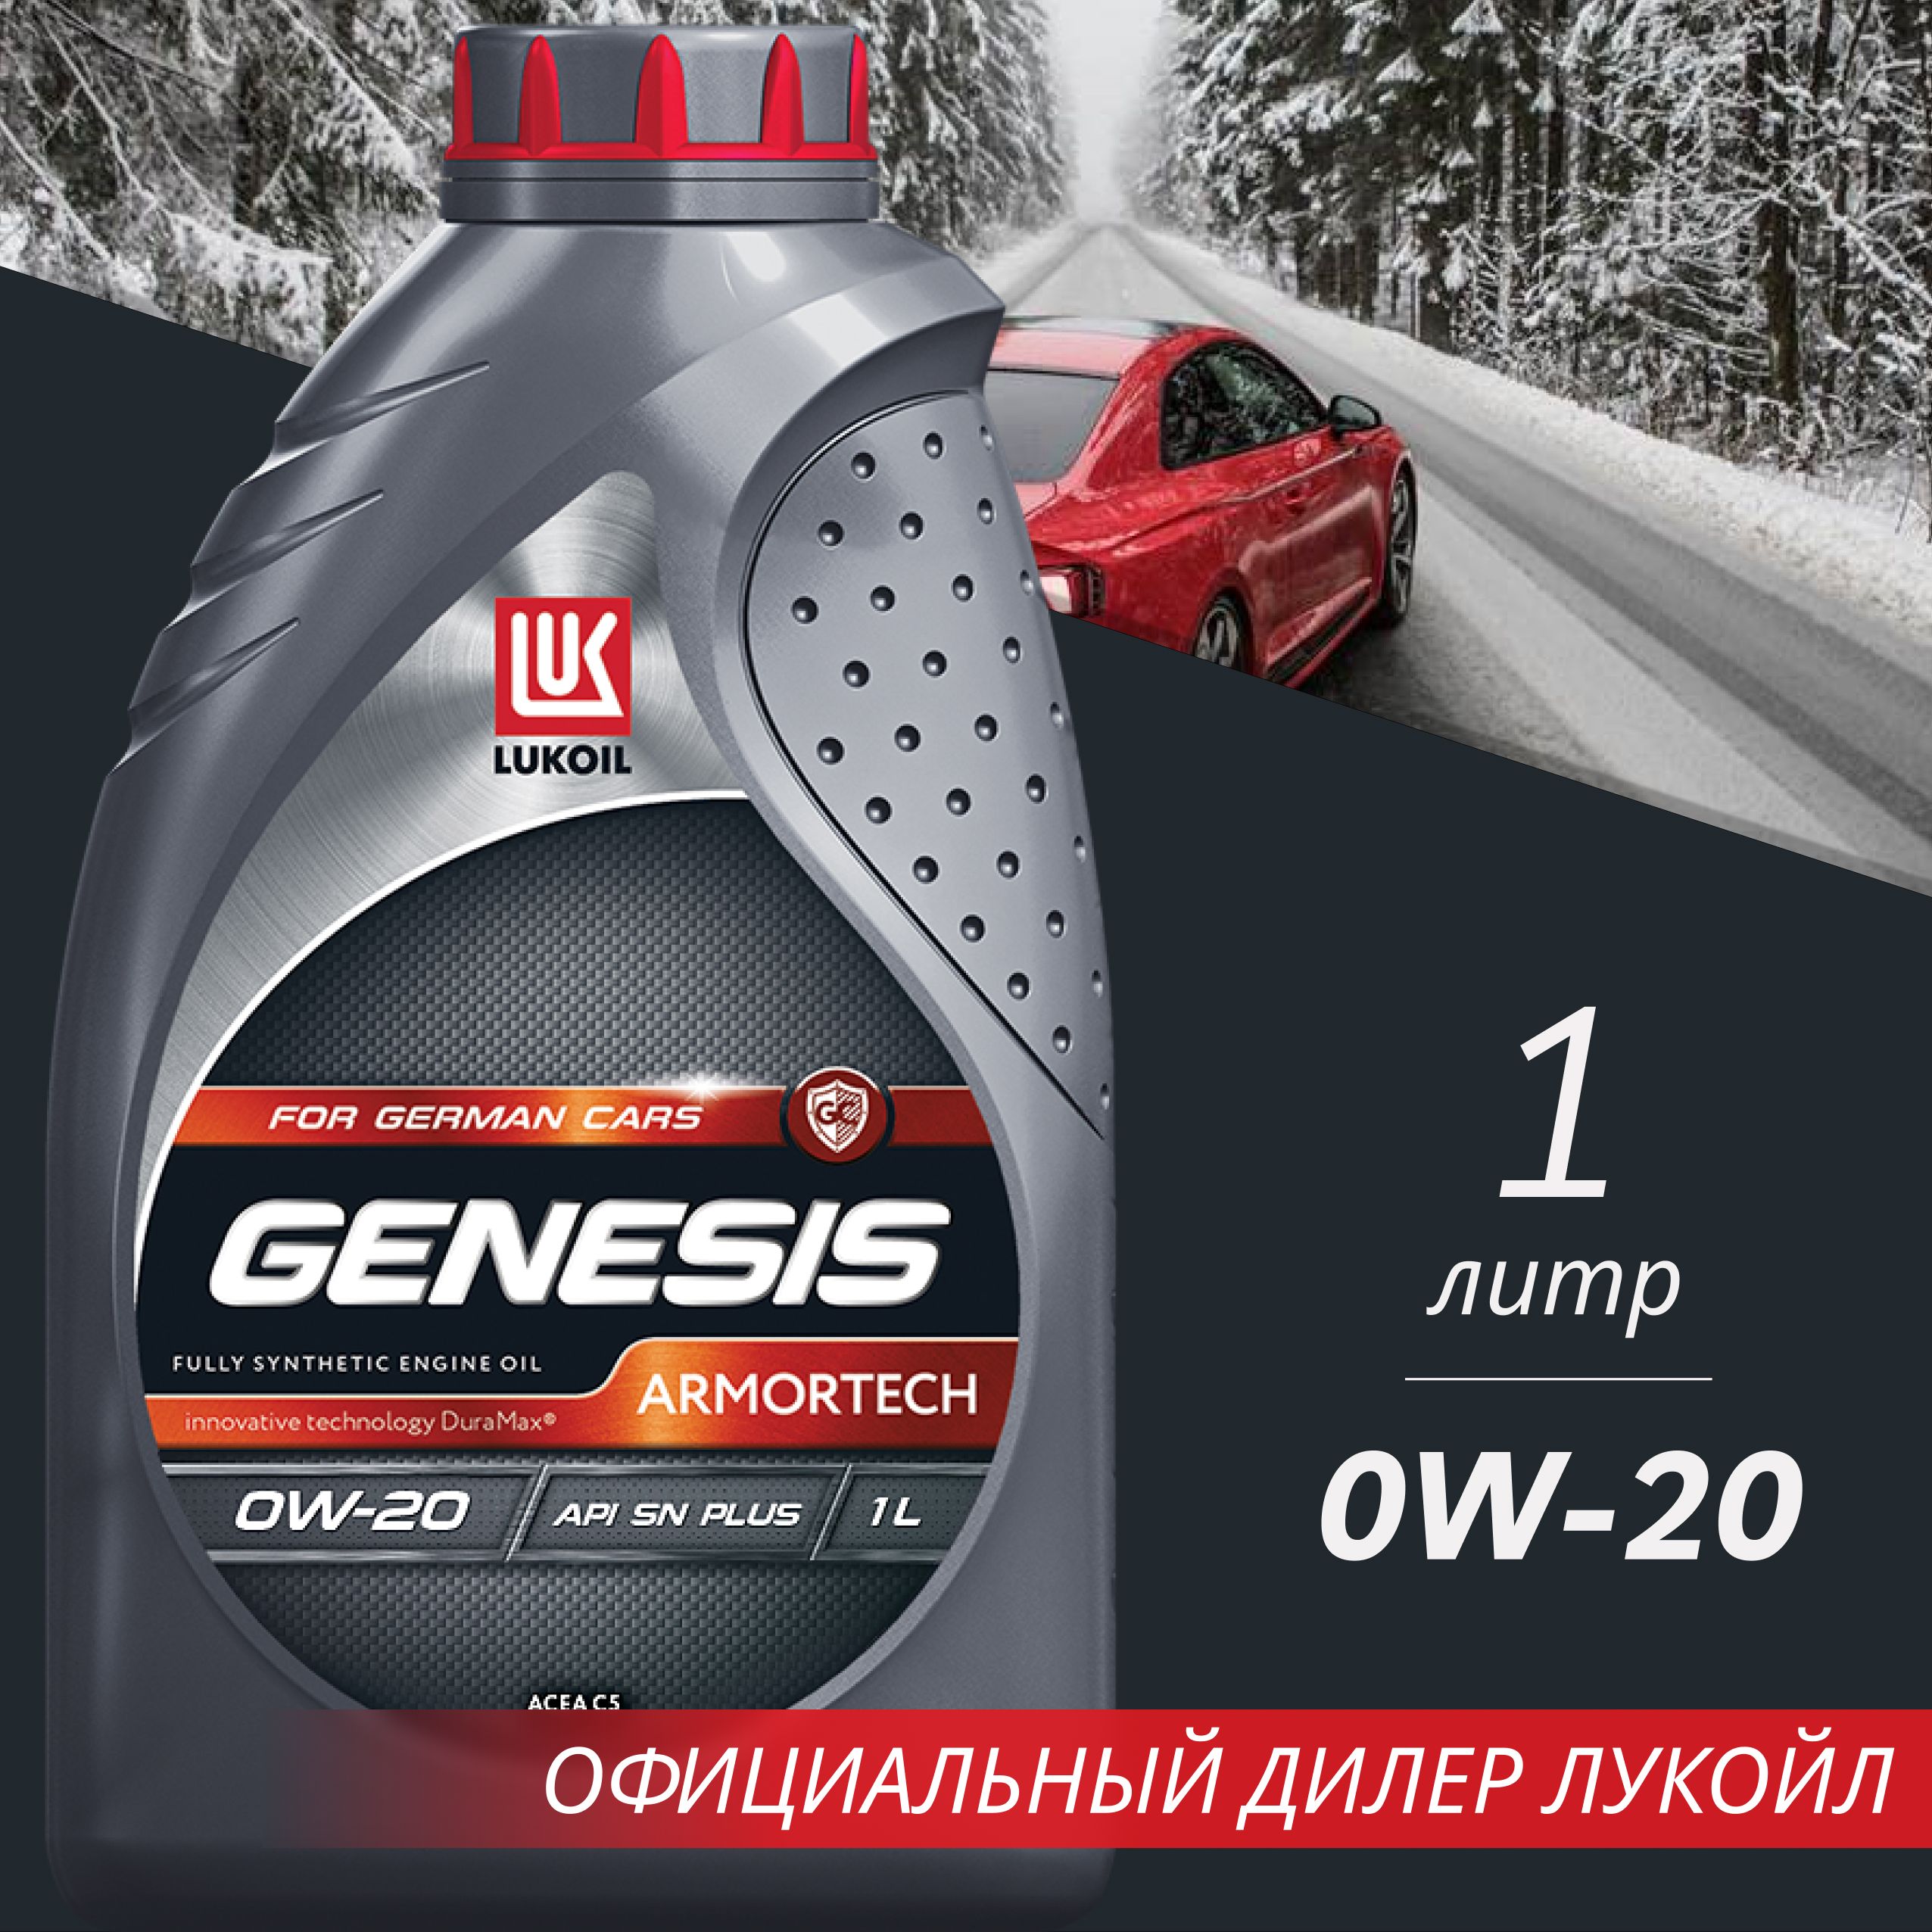 Масло лукойл генезис 0w20. Genesis Armortech GC 0w-20. Lukoil Genesis 0w20. Lukoil Genesis Special Fe 0w-20. Масло Lukoil 0w20 Special SPX Genesis.